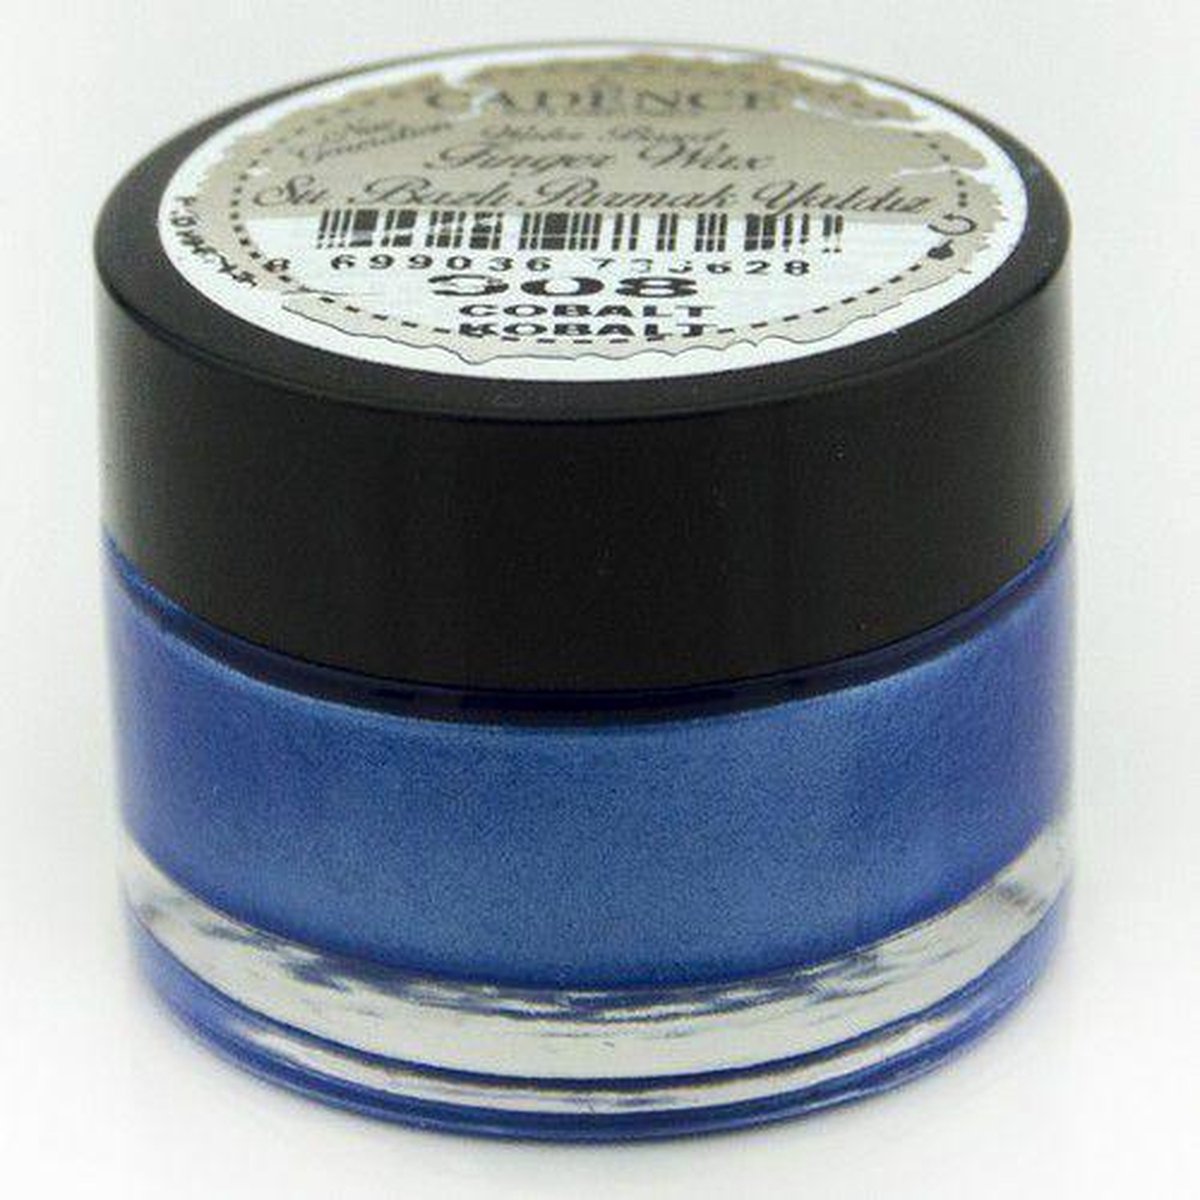 Afbeelding van product Cadence Water Based vinger Wax Kobaltblauw 01 015 0908 0020 20 ml